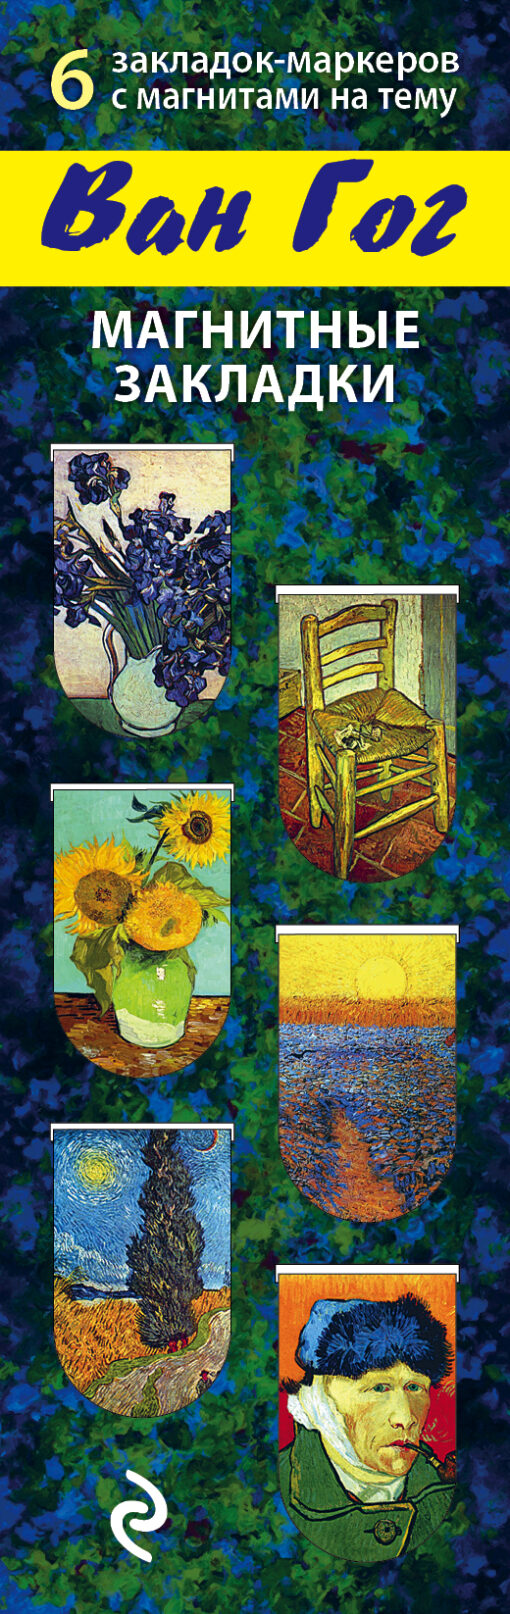 Magnetic bookmarks. van Gogh